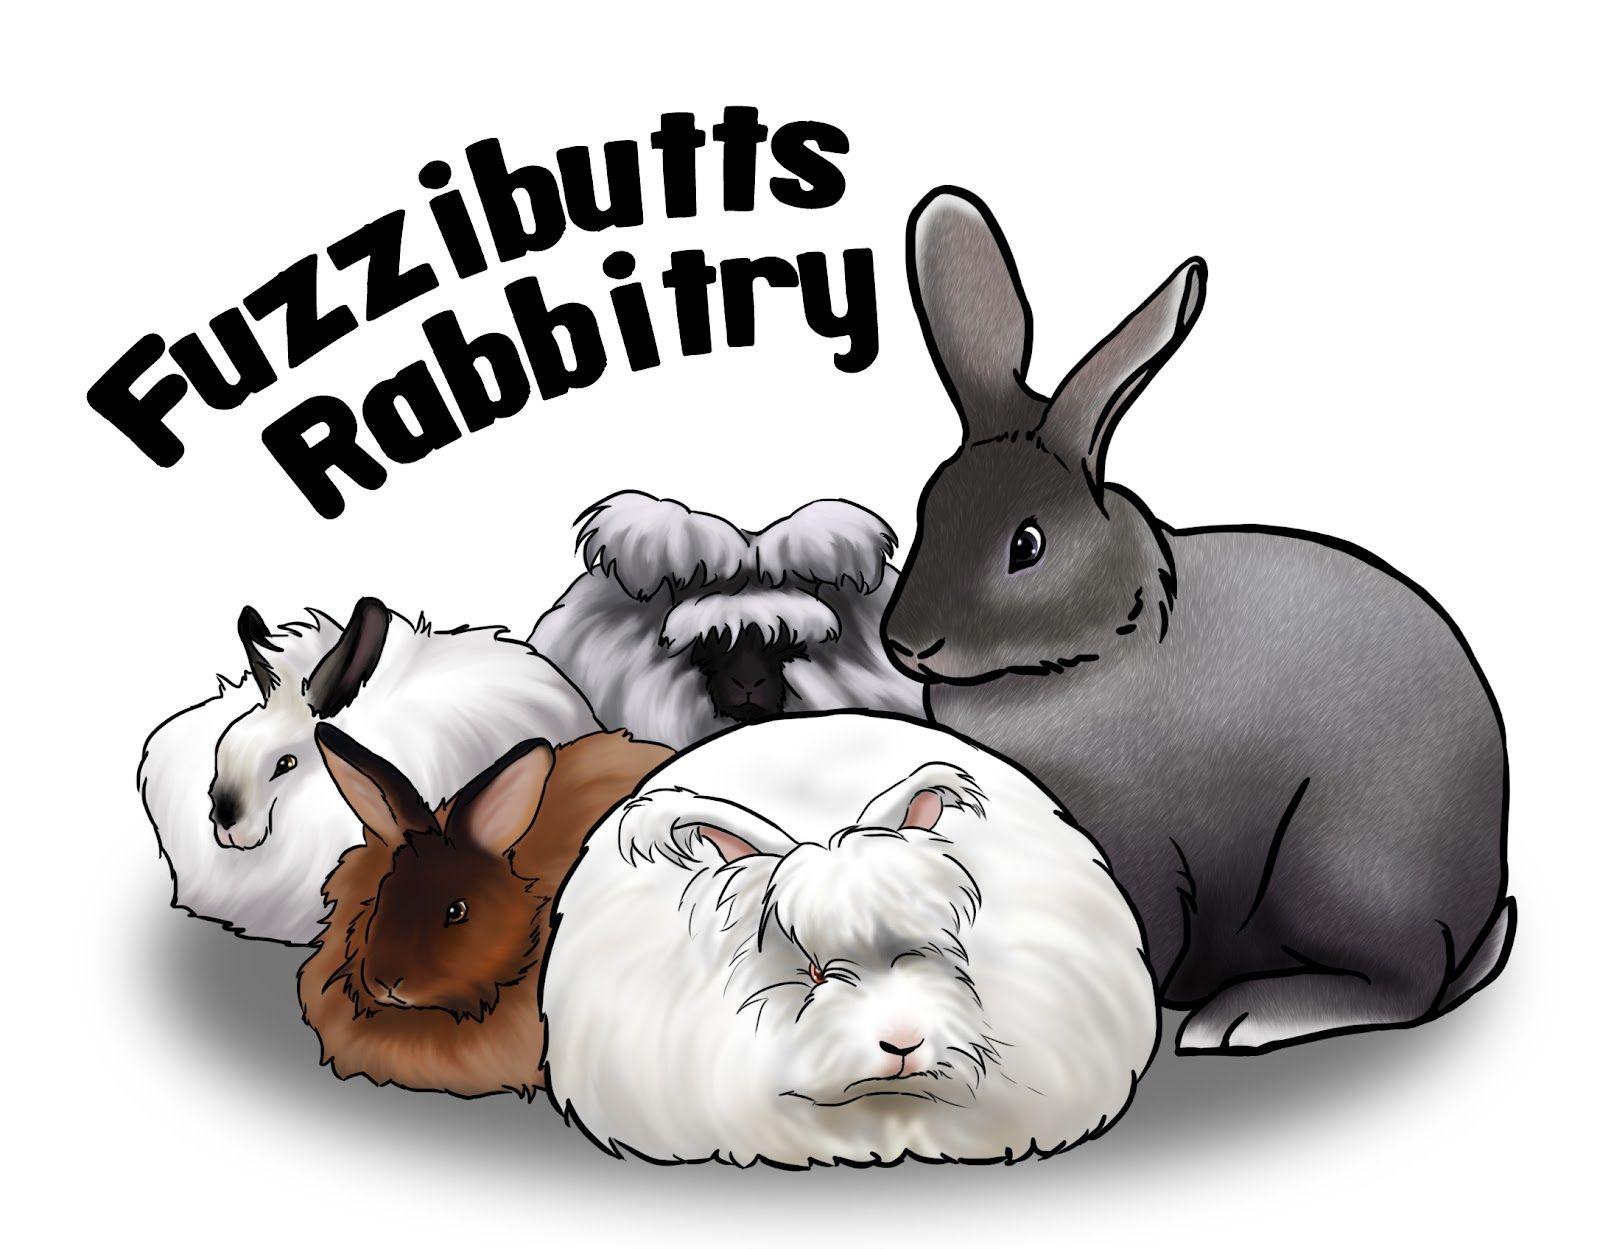 Rabbitry Logo - Fuzzibutt's Rabbitry: Our new logo